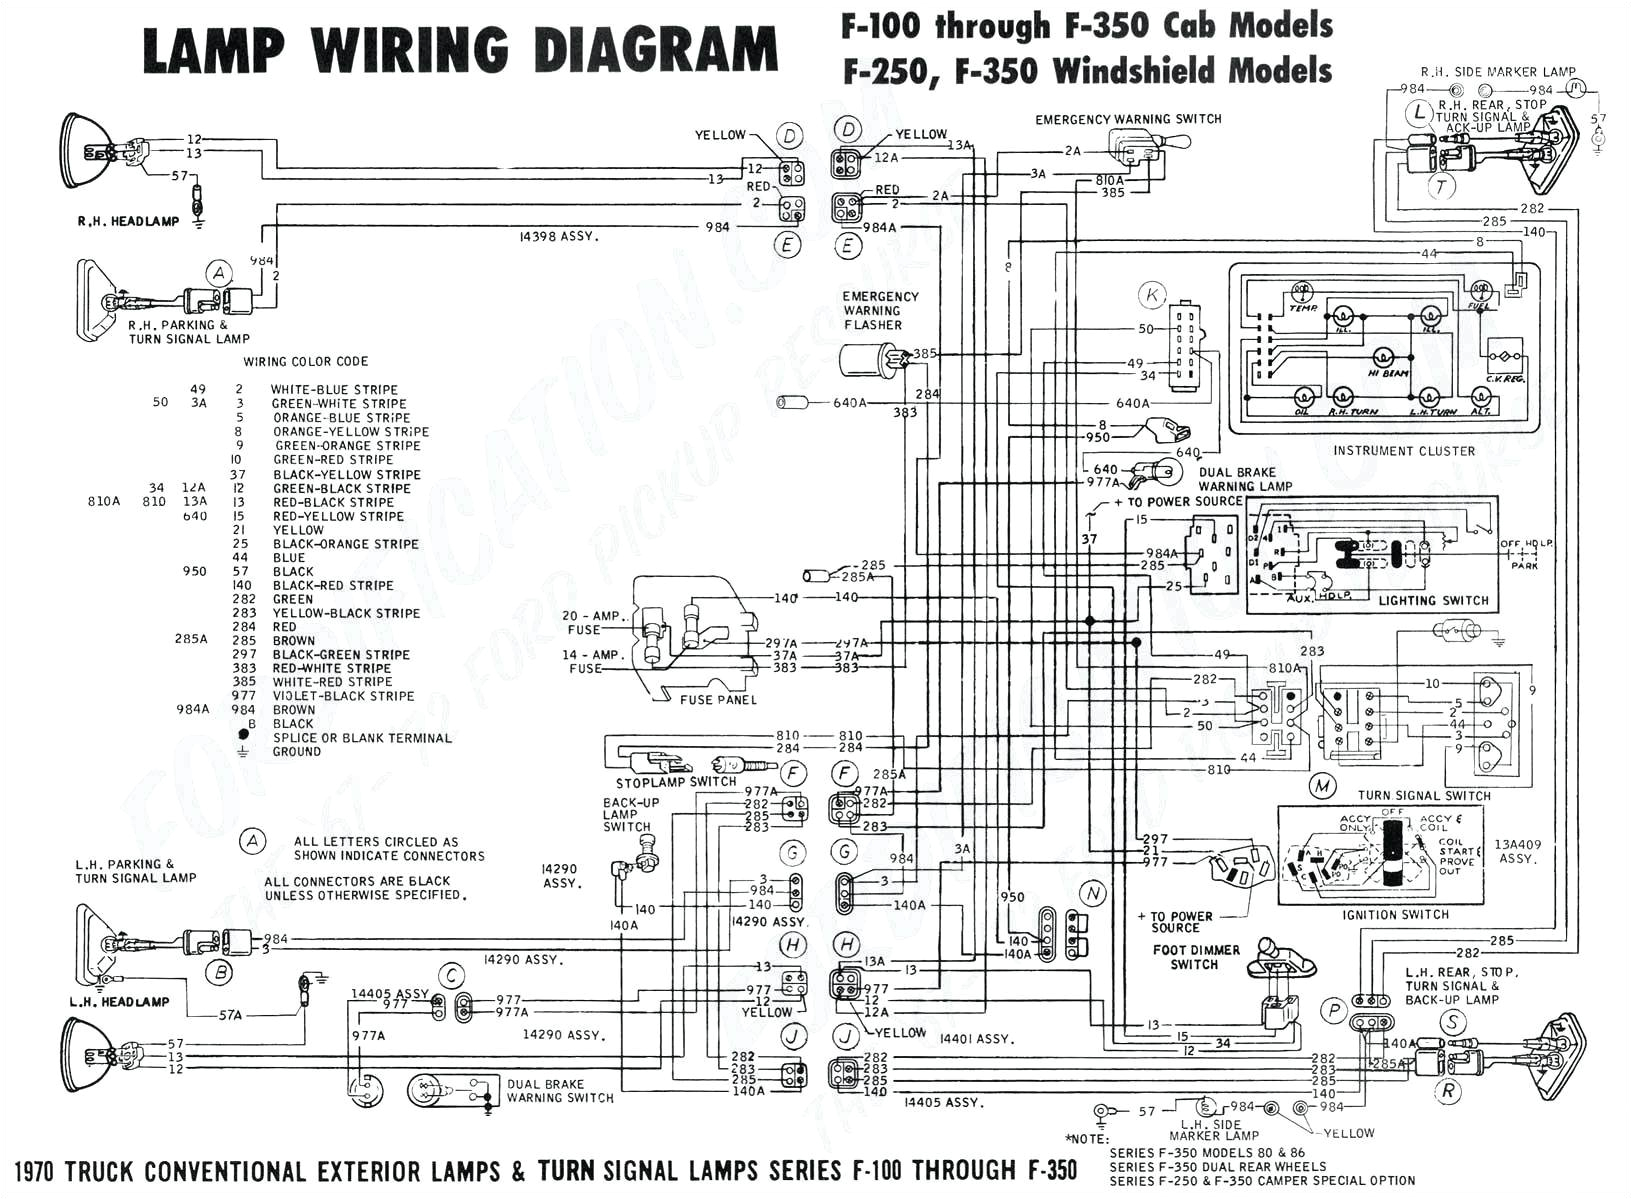 wire diagram 17 d wiring diagram load wire diagram 17 d